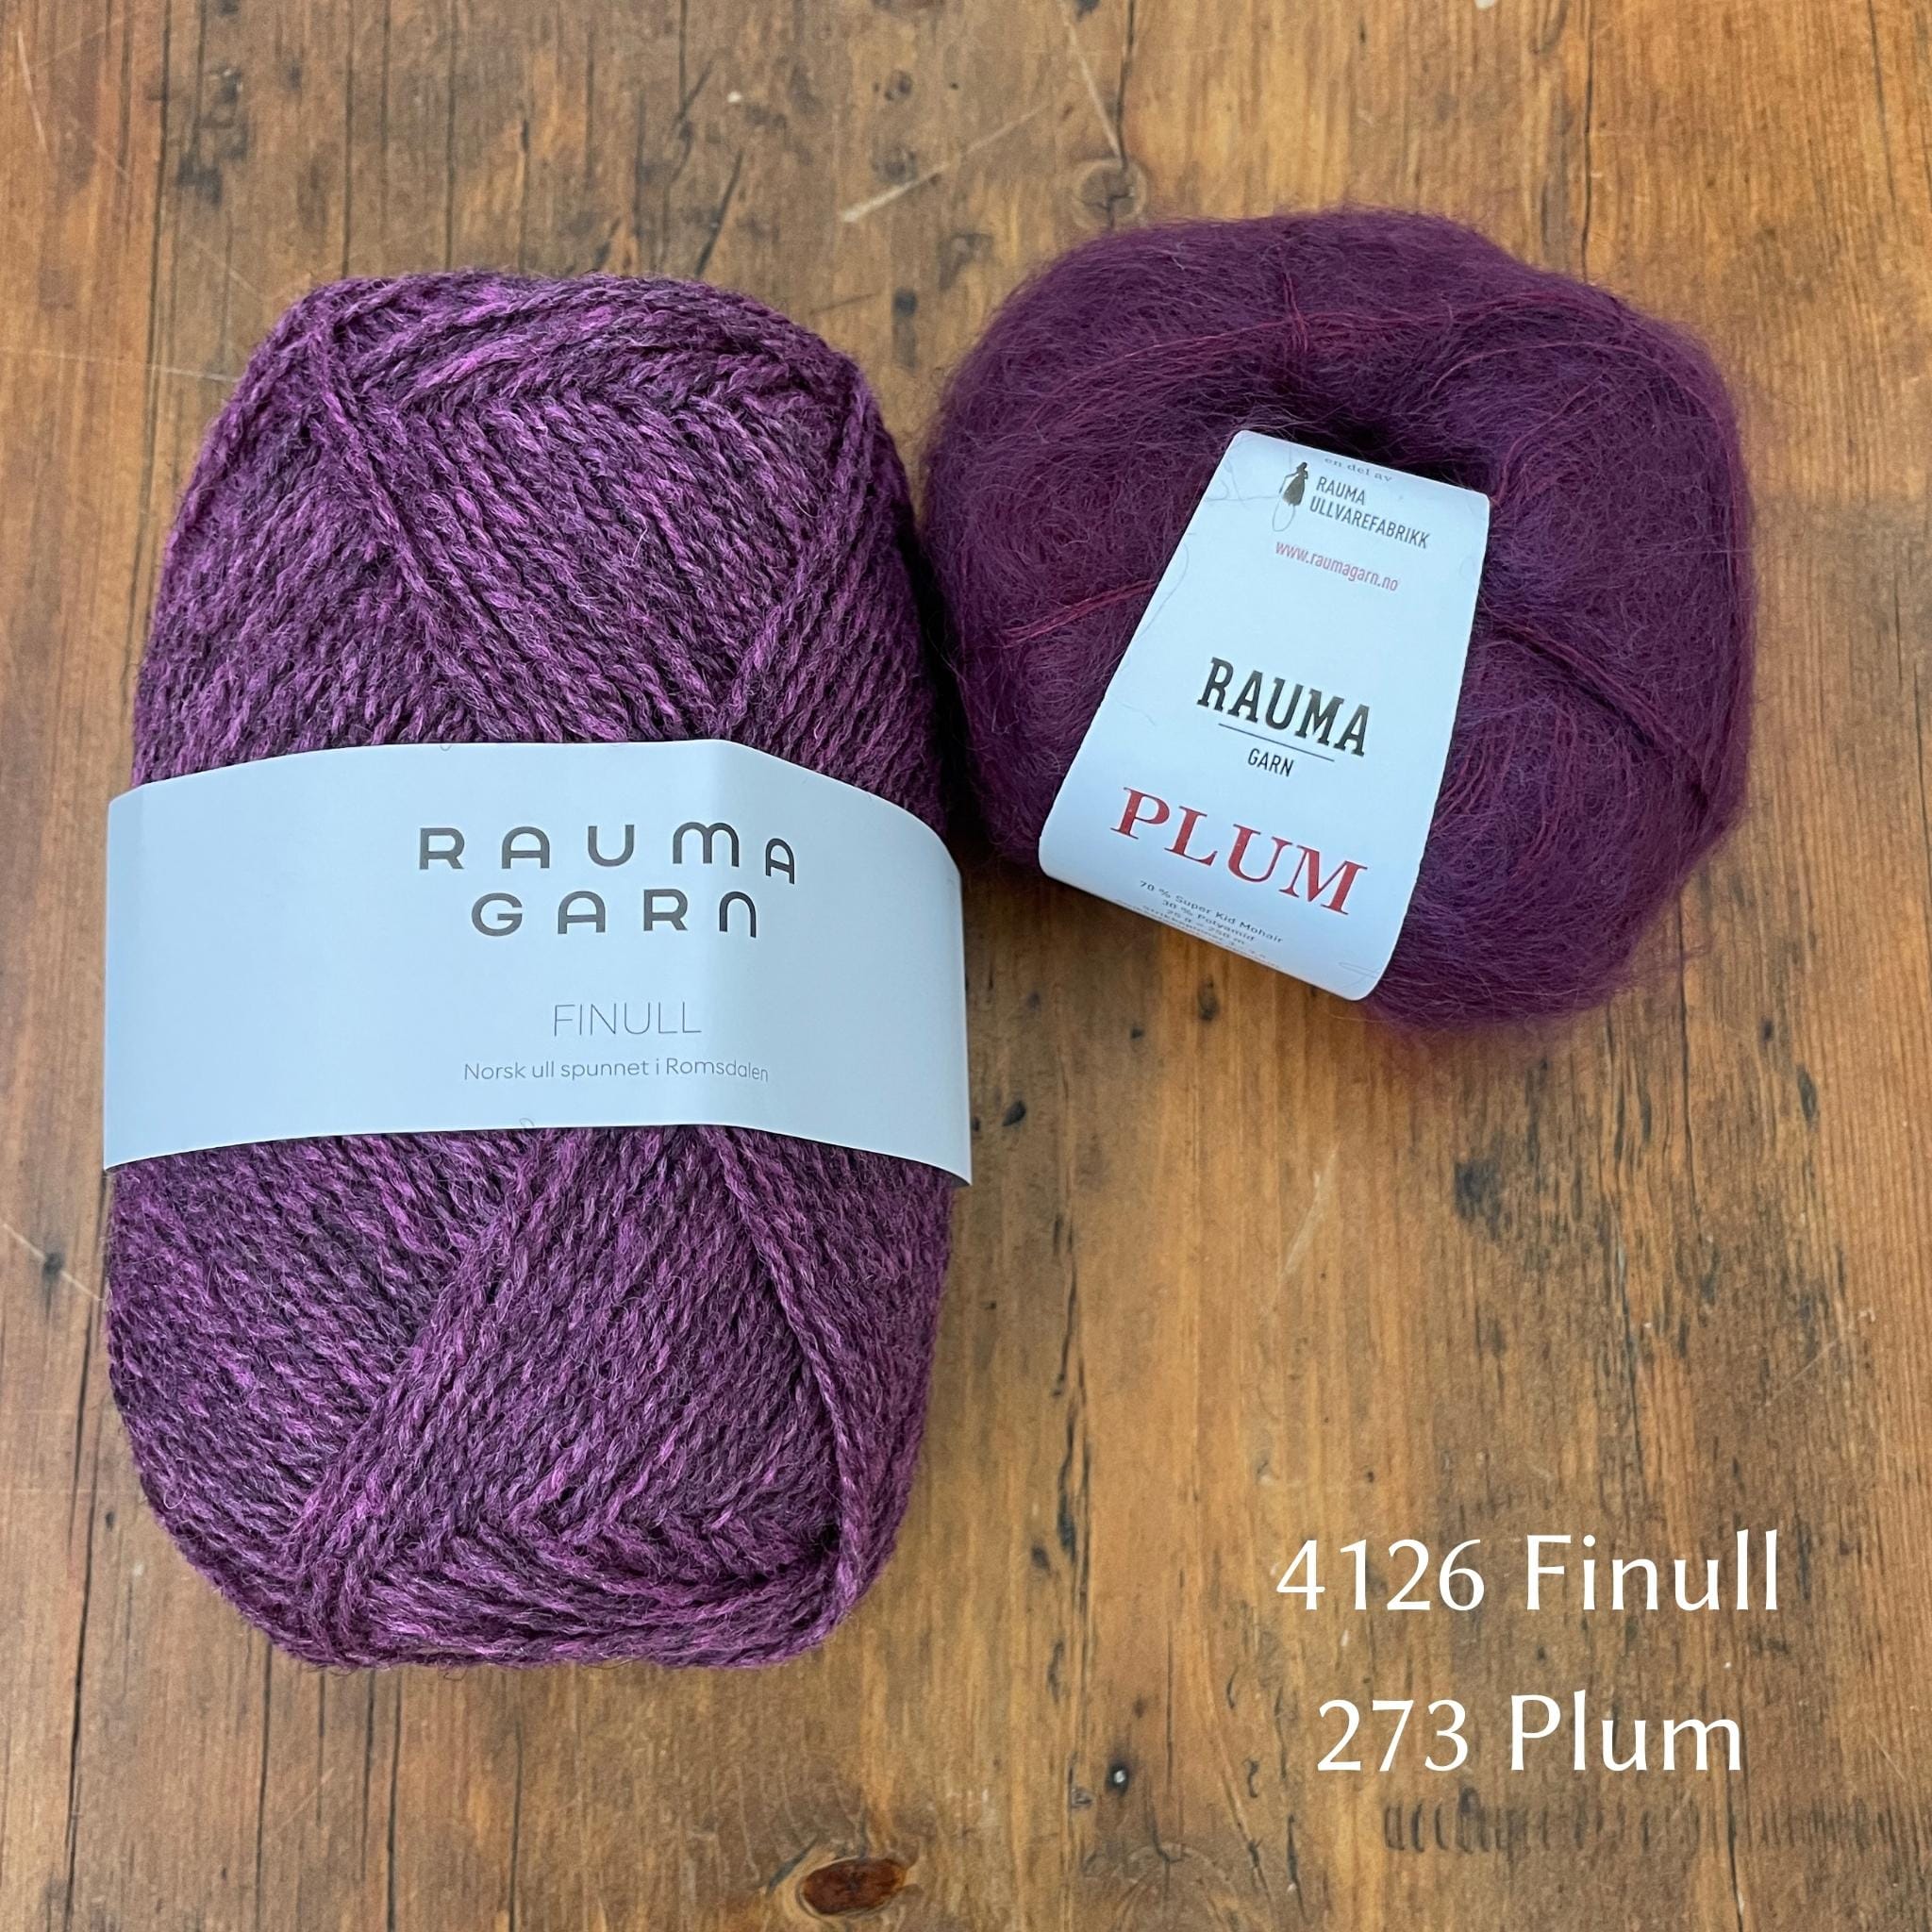 Ball of Rauma Finullgarn yarn in heathered bright mauve with coordinating Plum yarn 